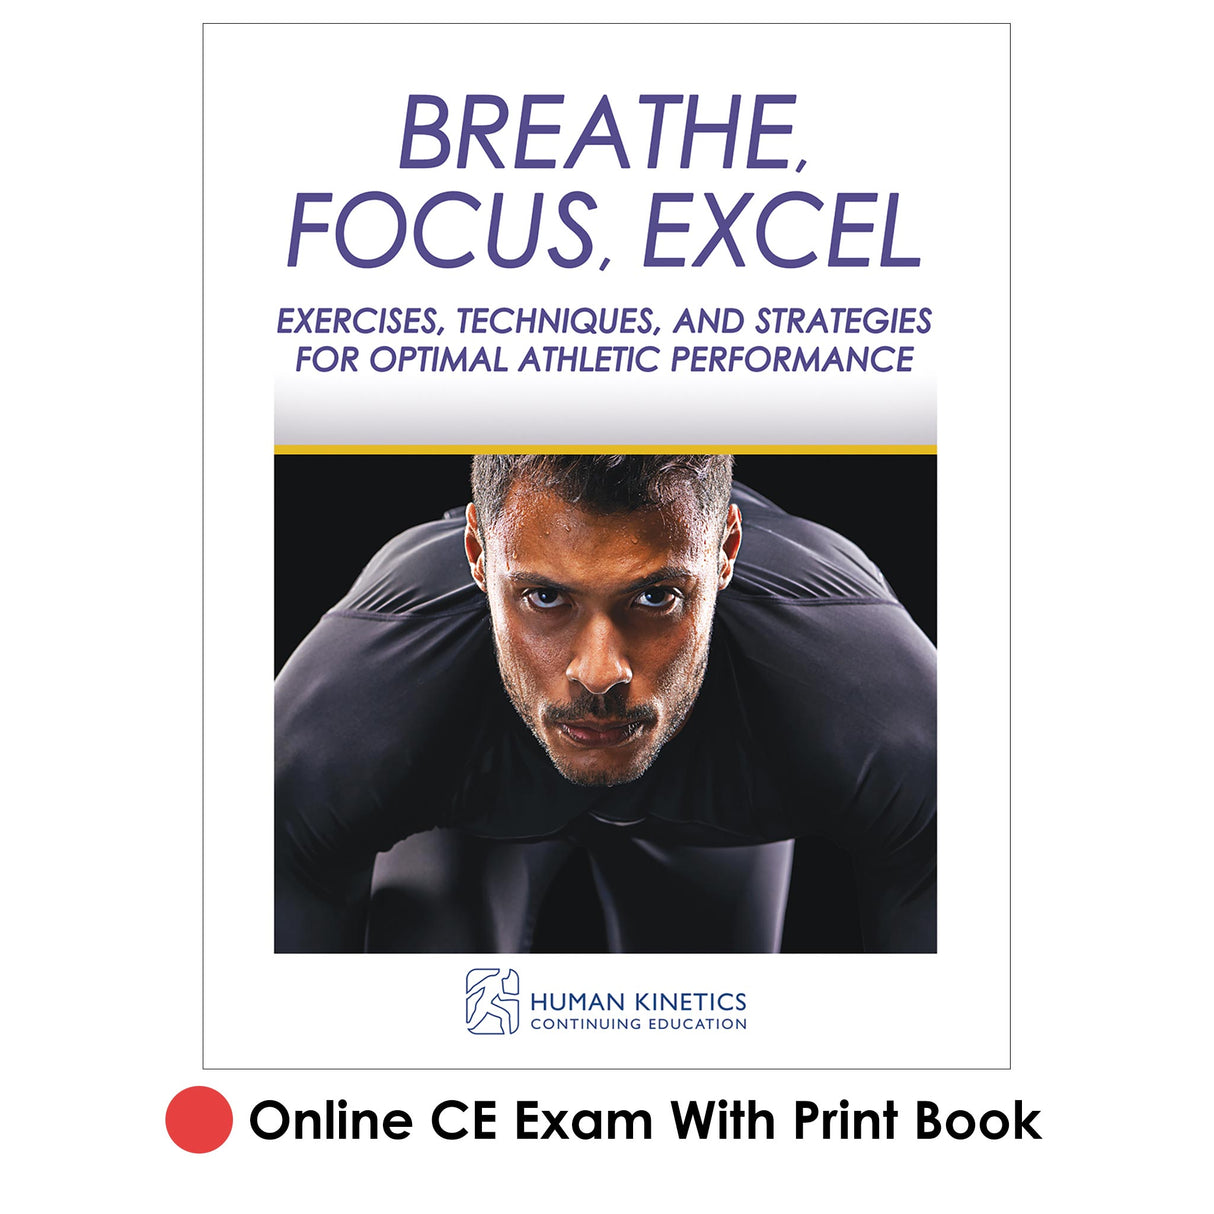 Breathe, Focus, Excel Online CE Exam With Print Book